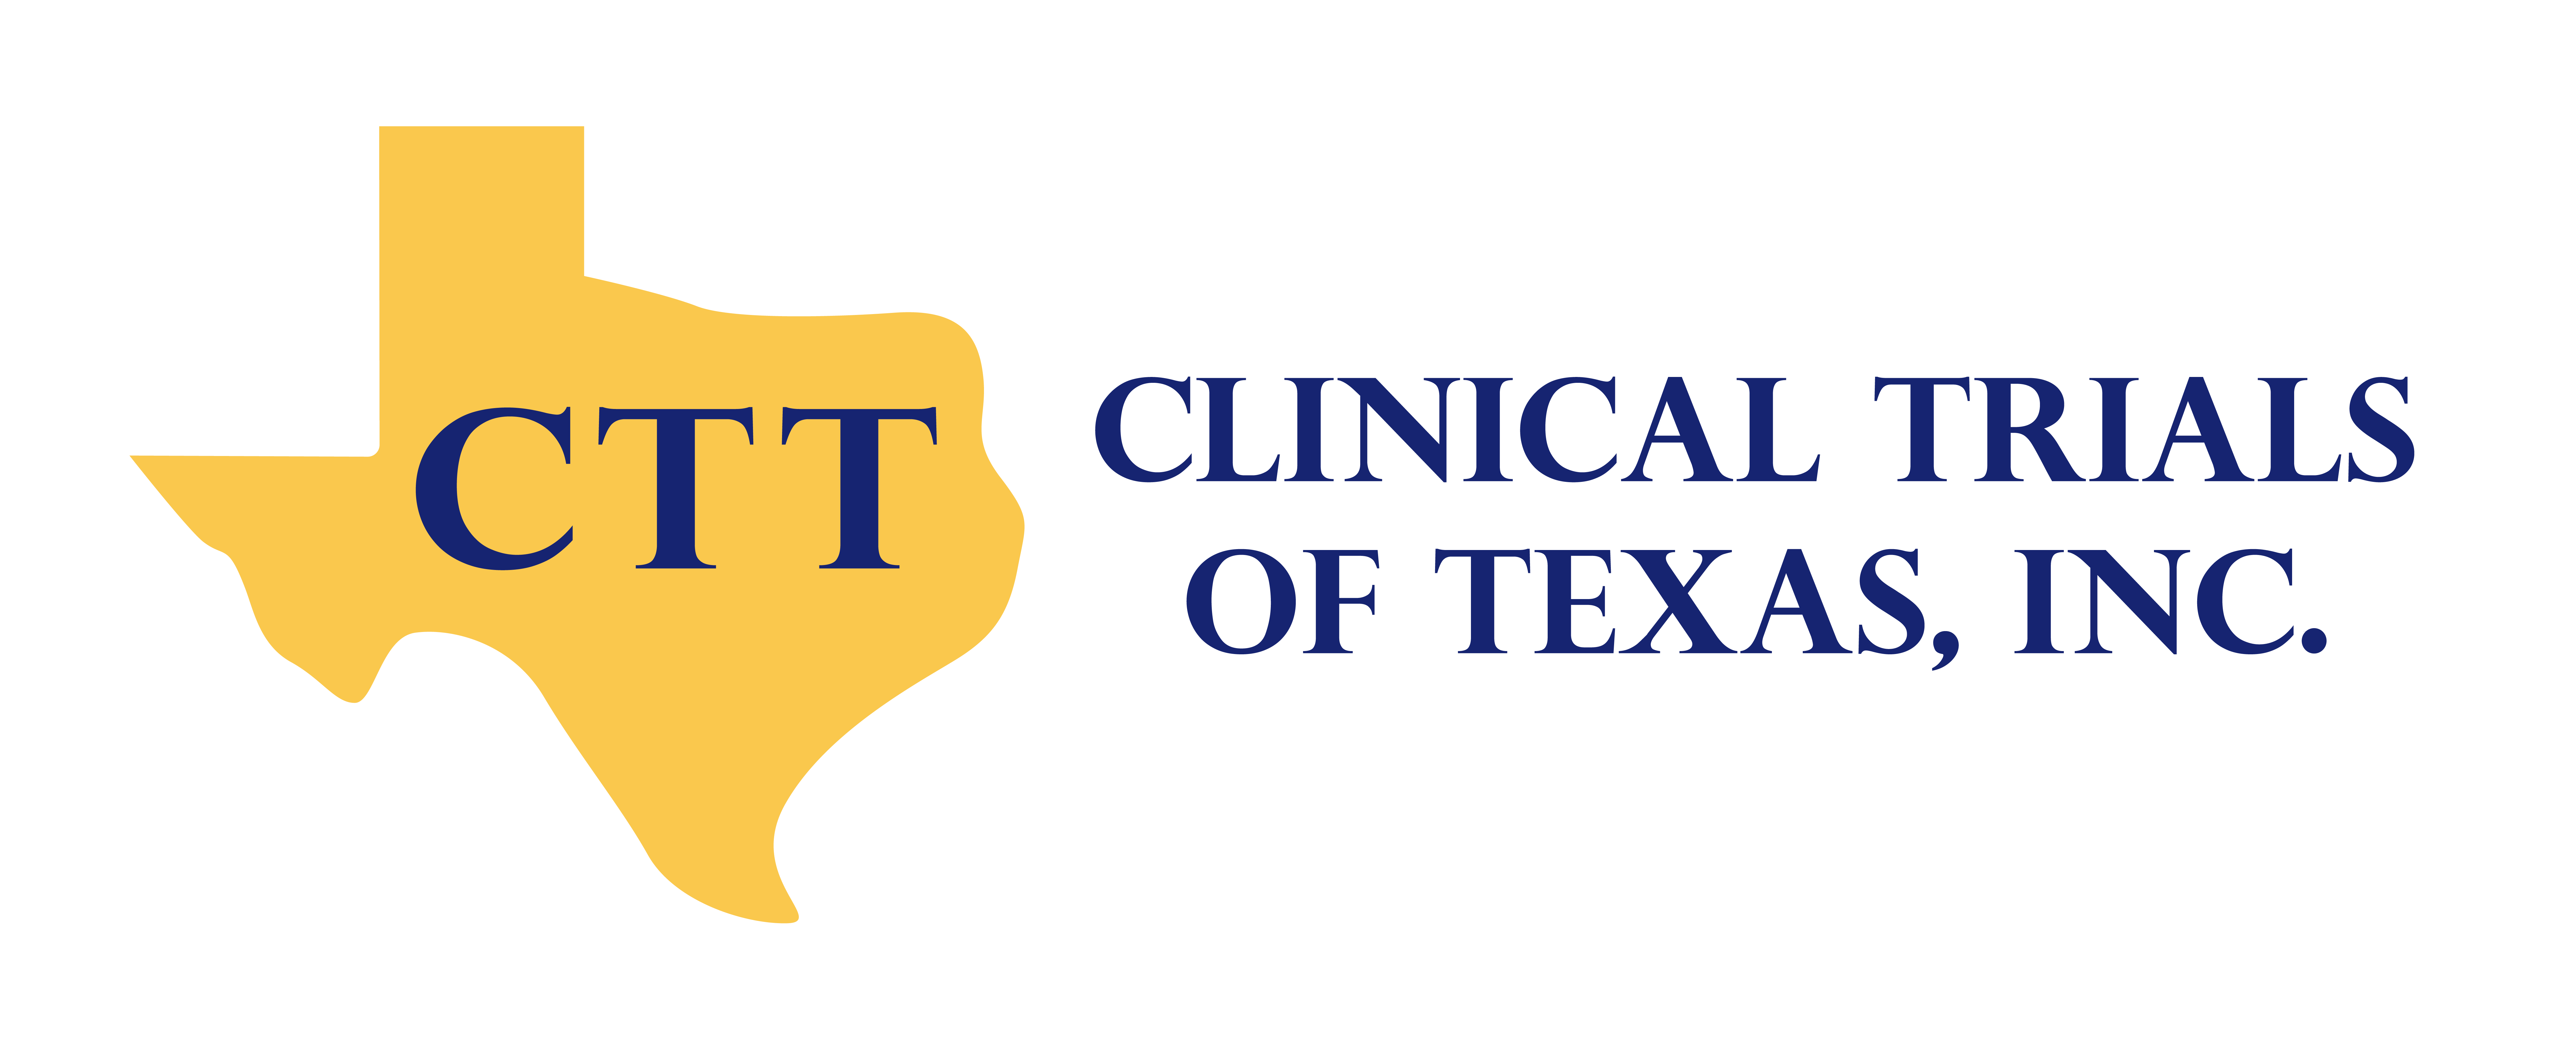 Clinical Trials of Texas, Inc. logo